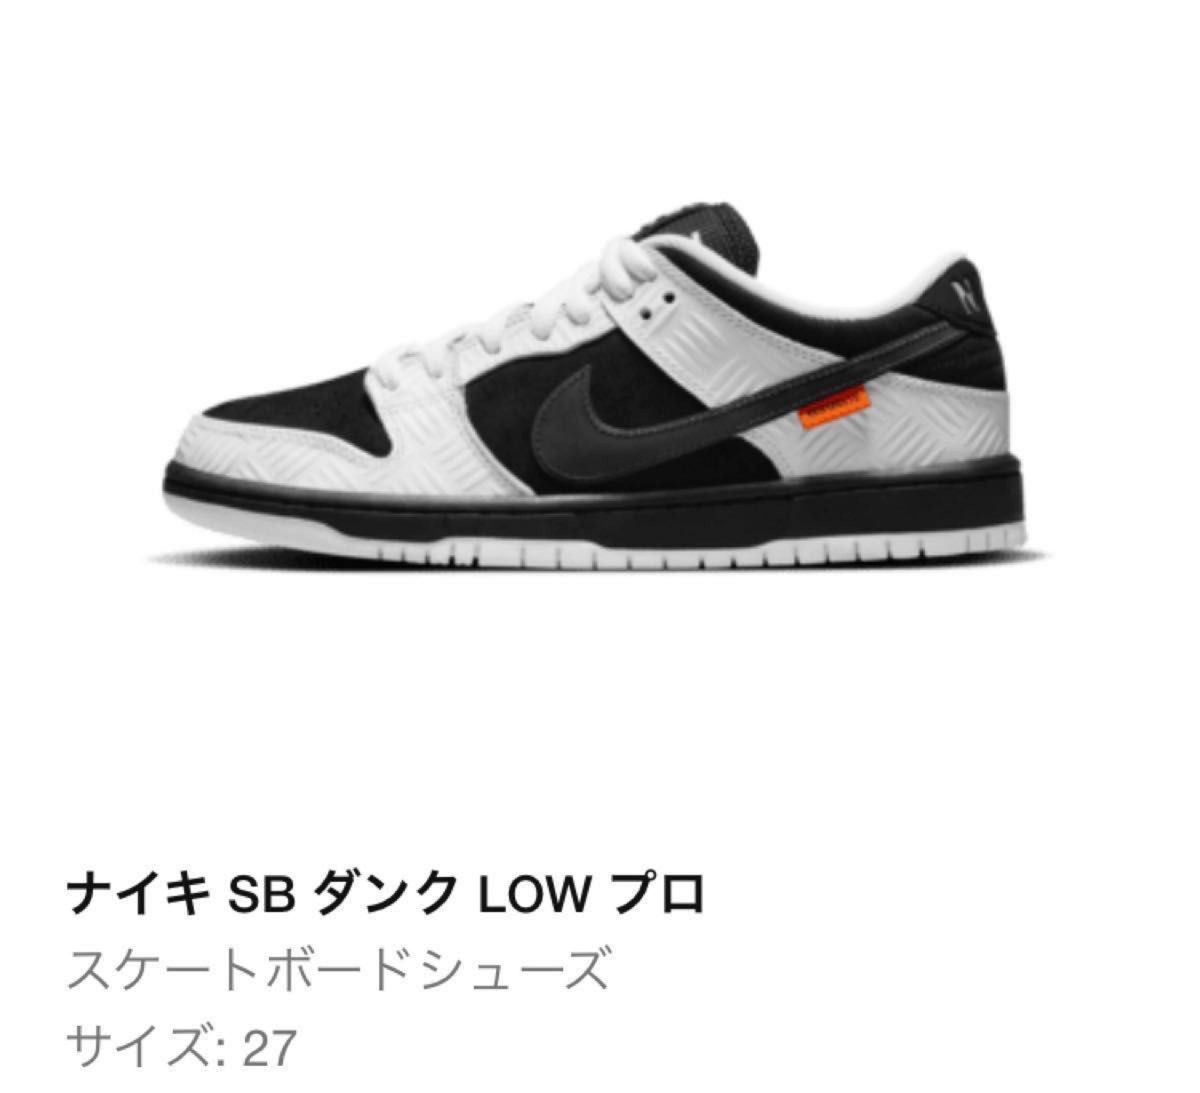 TIGHTBOOTH × Nike SB Dunk Low Pro QS bw 27.0cm